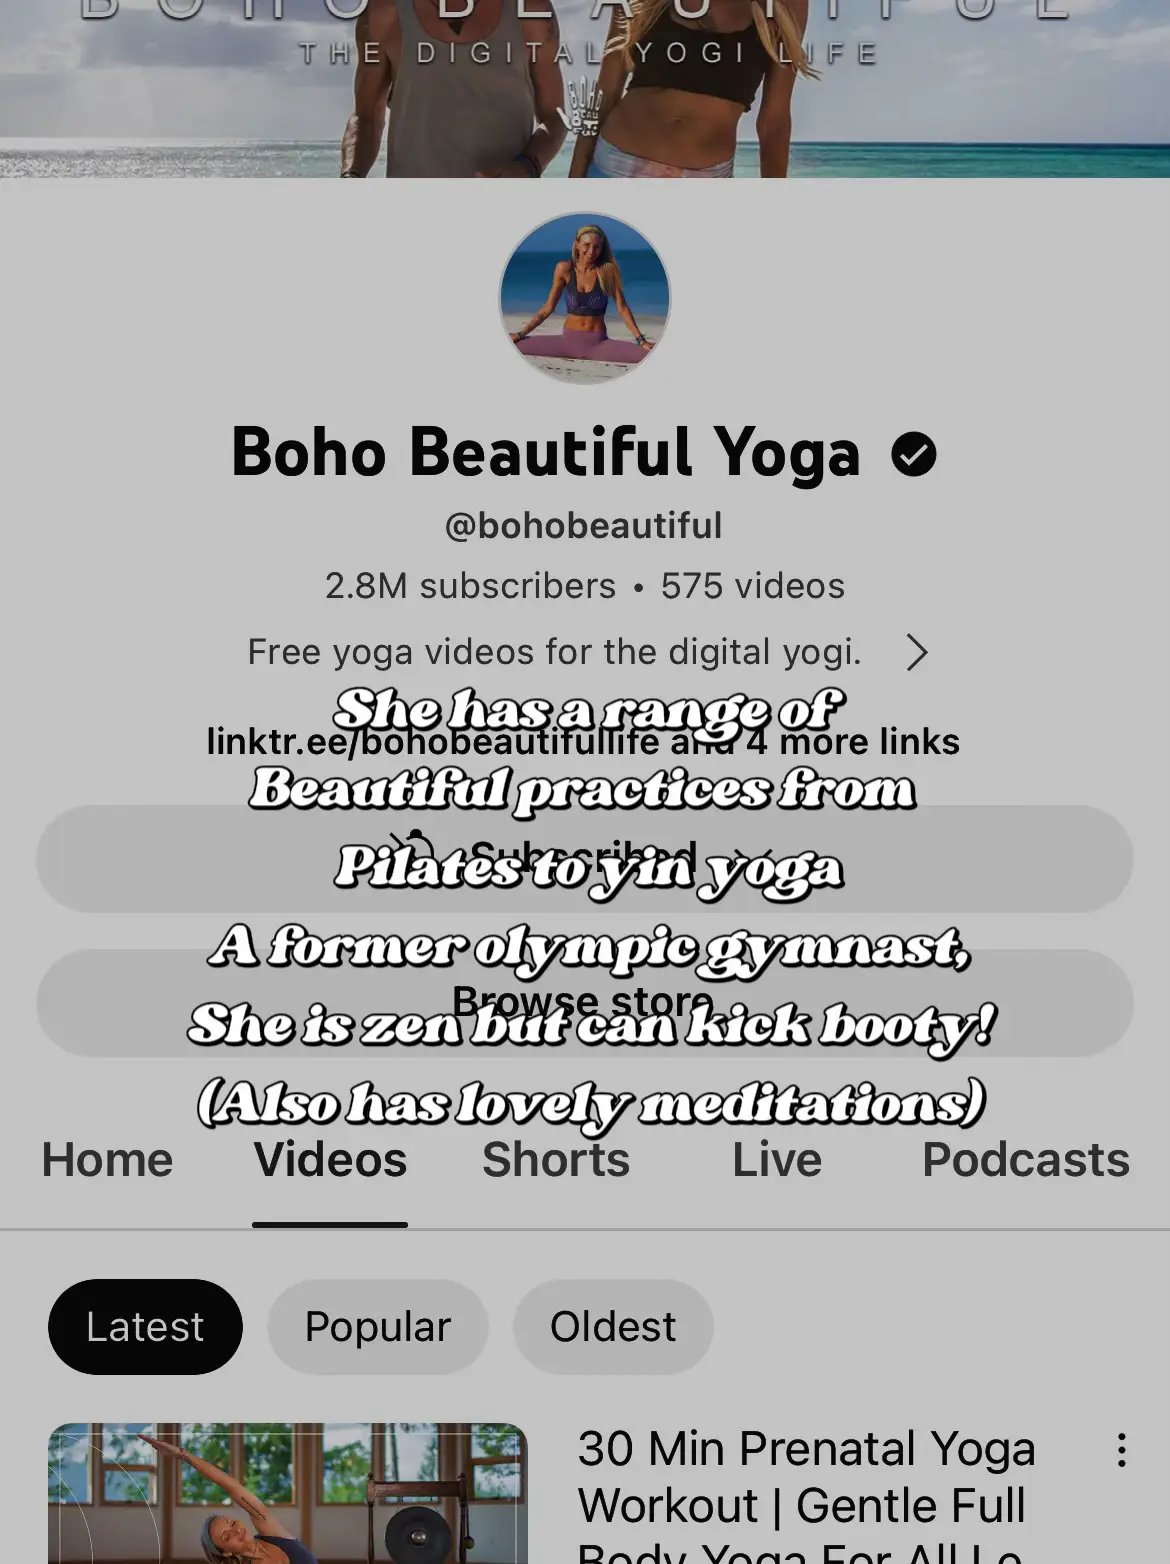 Boho Beautiful Yoga